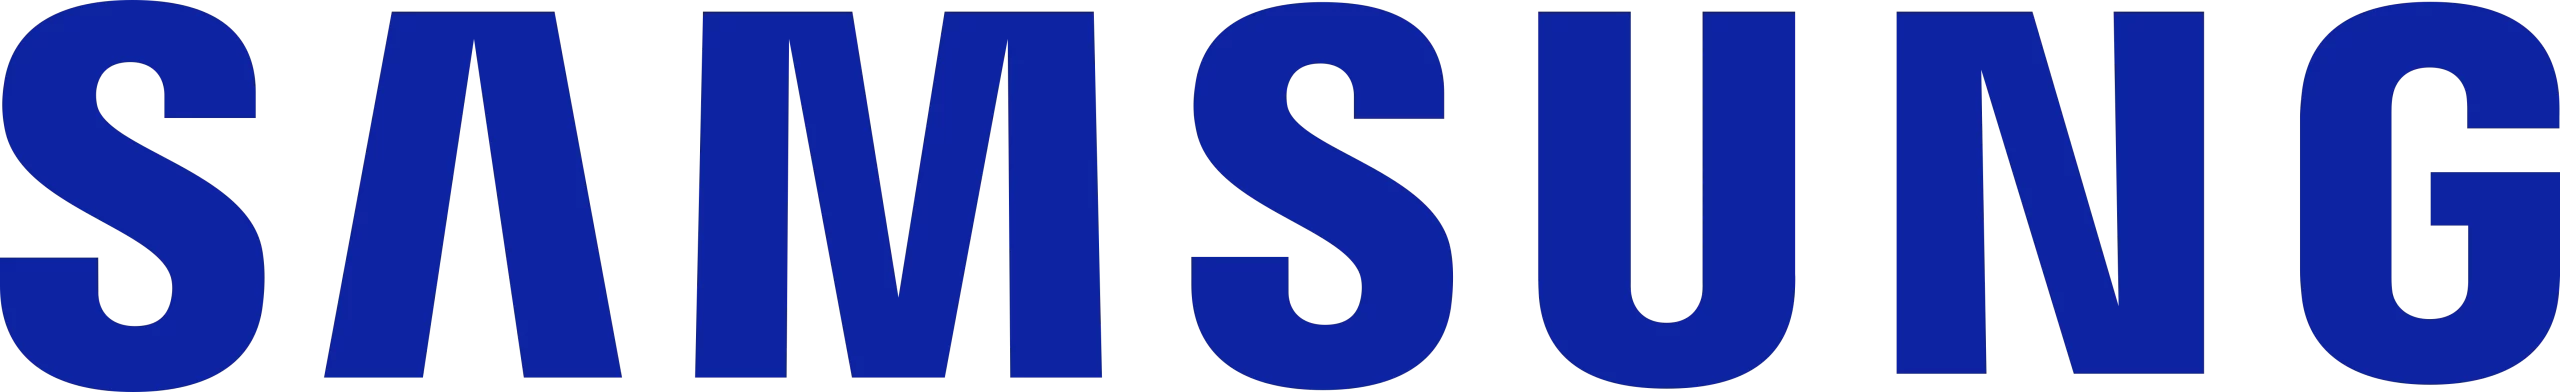 samsung logo scaled